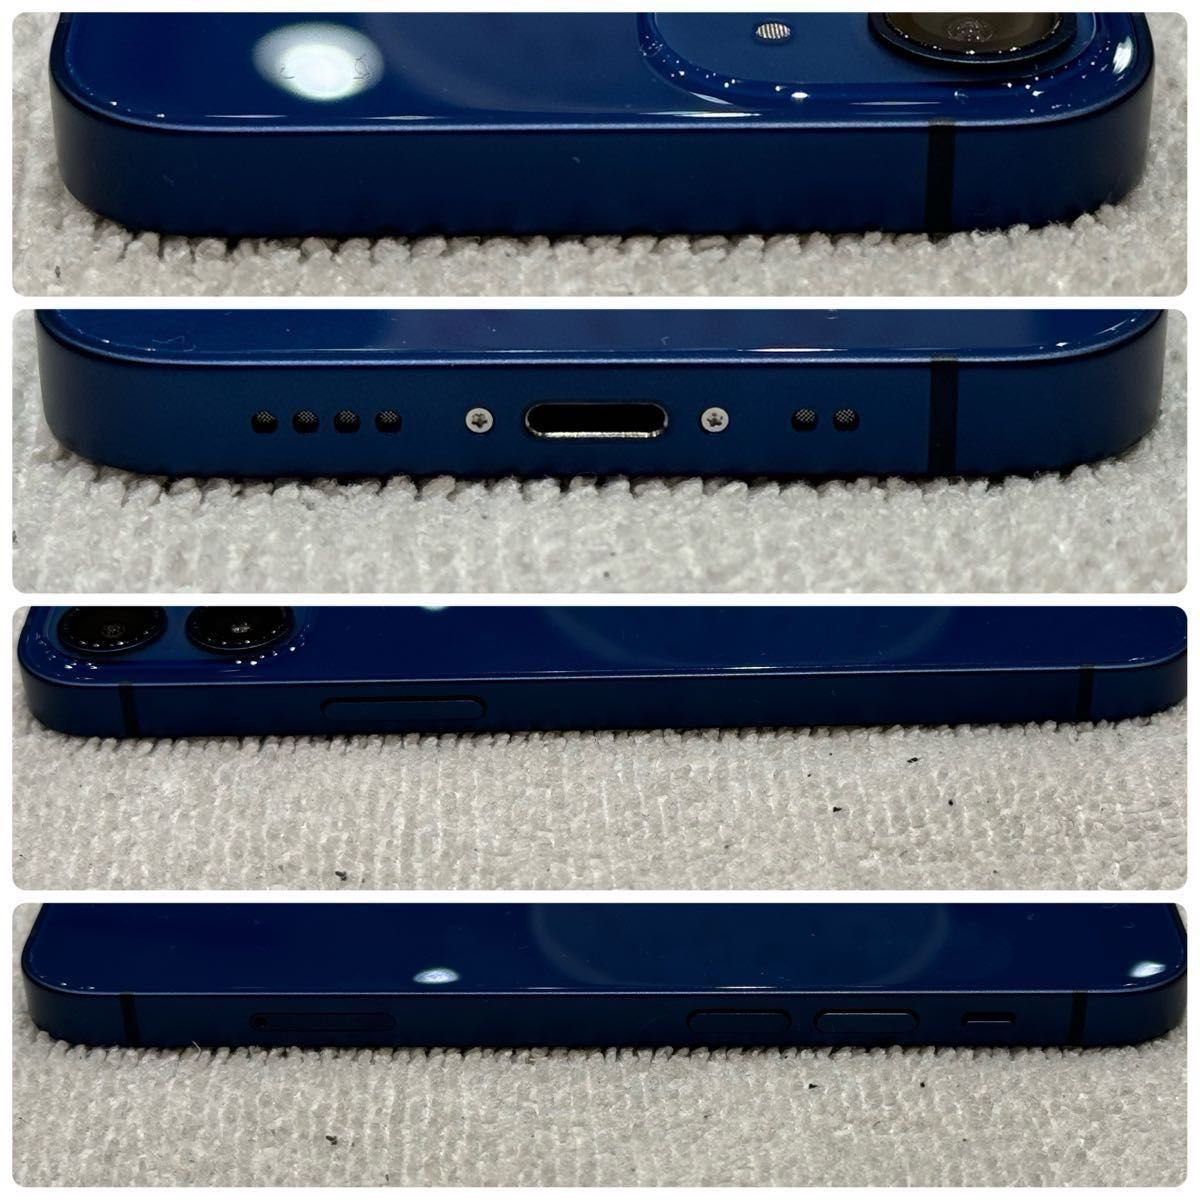 【即購入可能】iPhone 12 mini 64GB 元デモ機